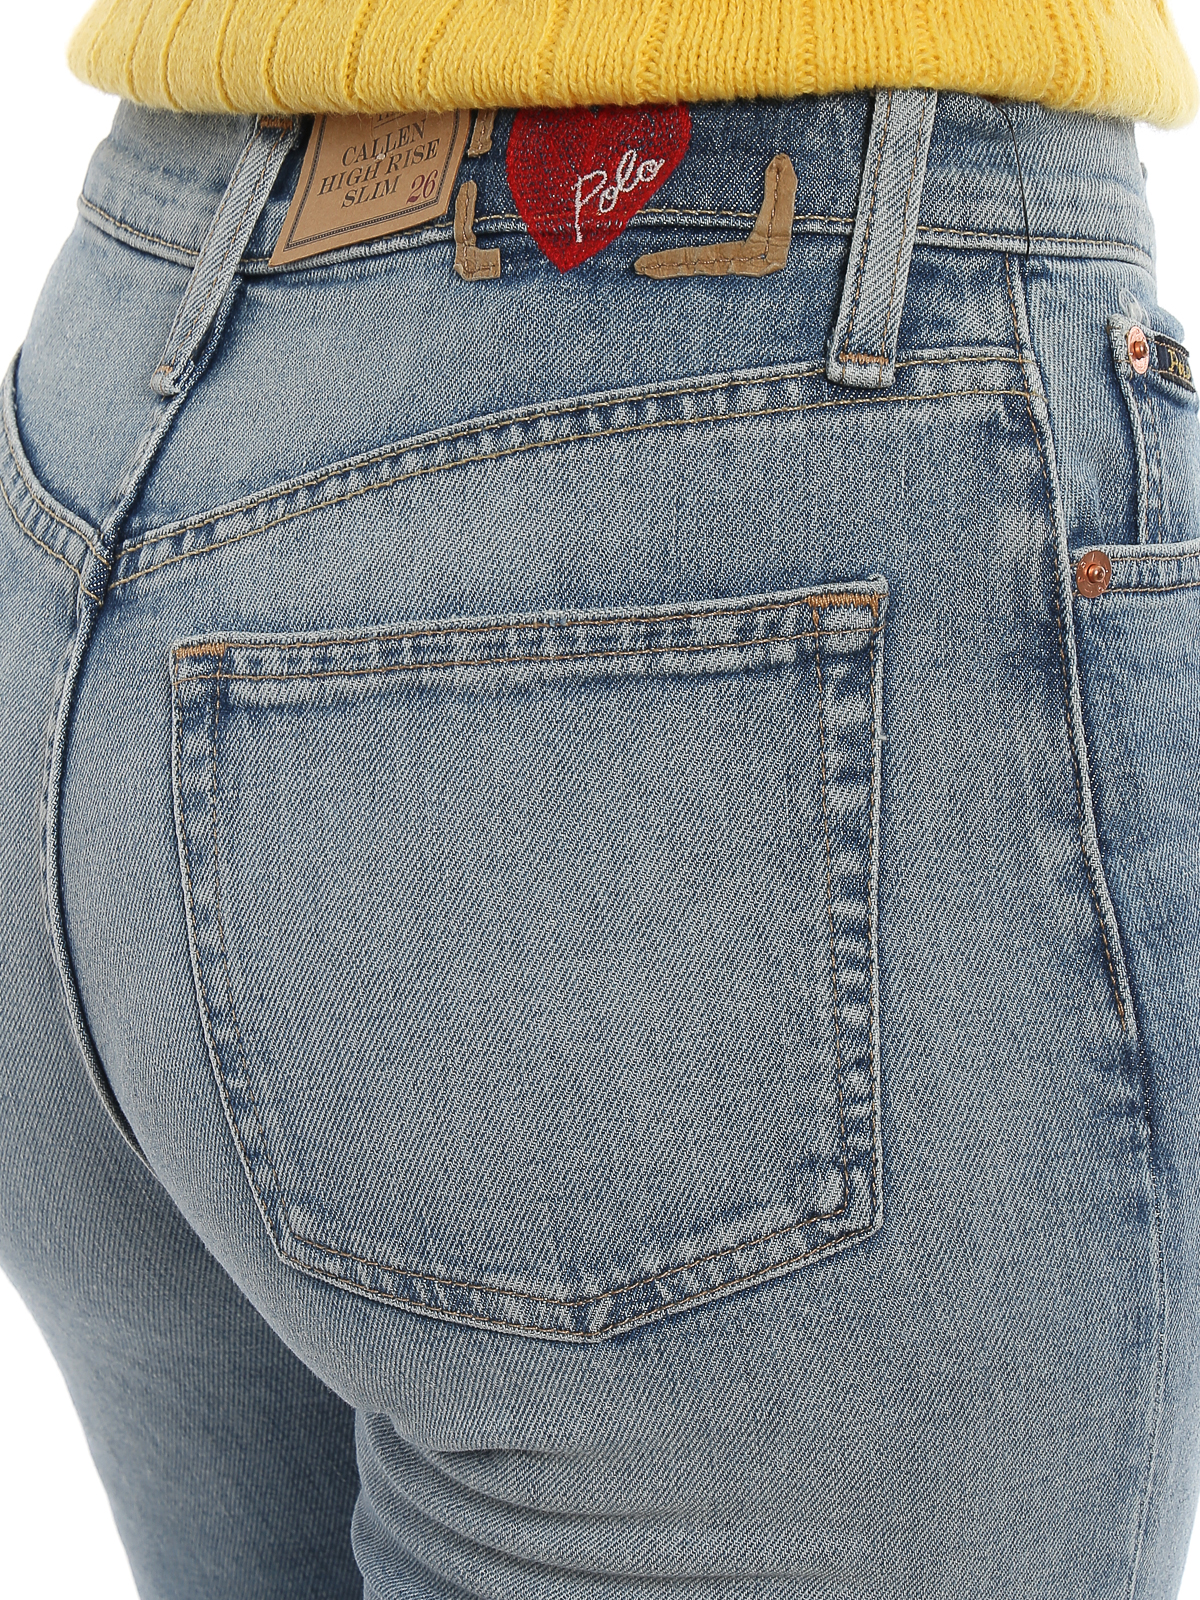 jeans Polo Lauren - Callen high rise slim jeans -